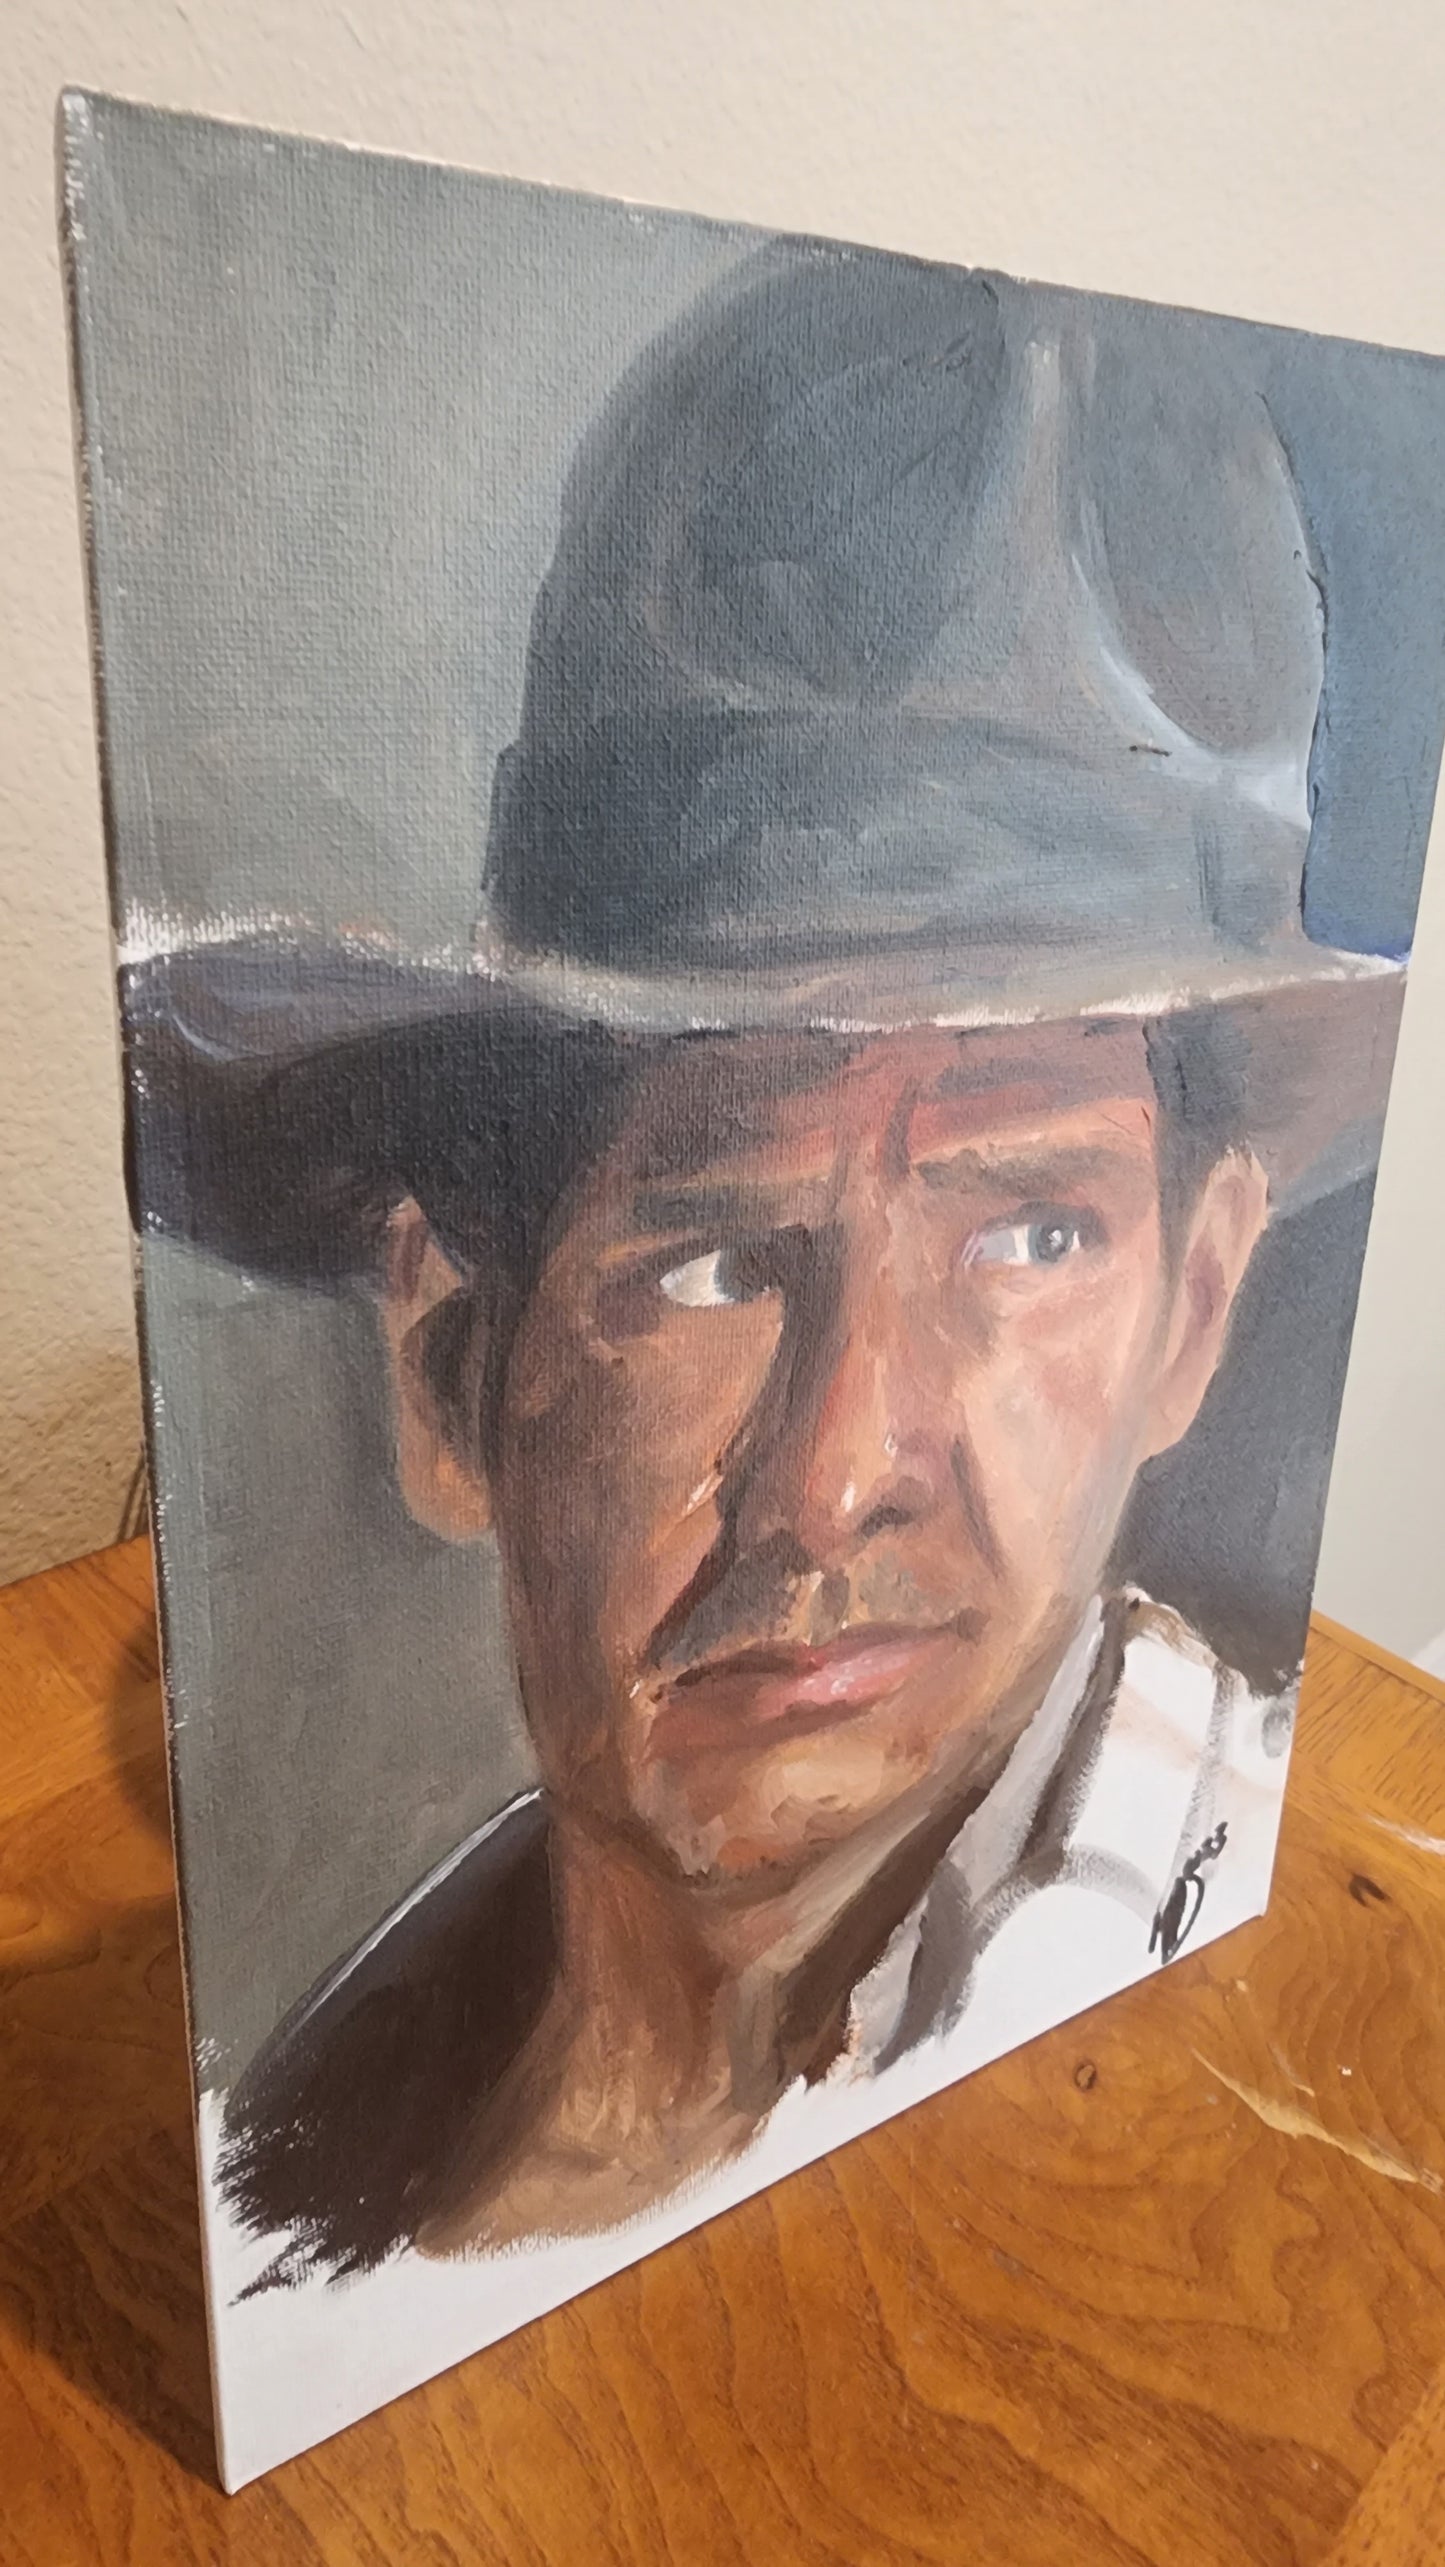 Harrison Ford "Indiana Jones" portrait